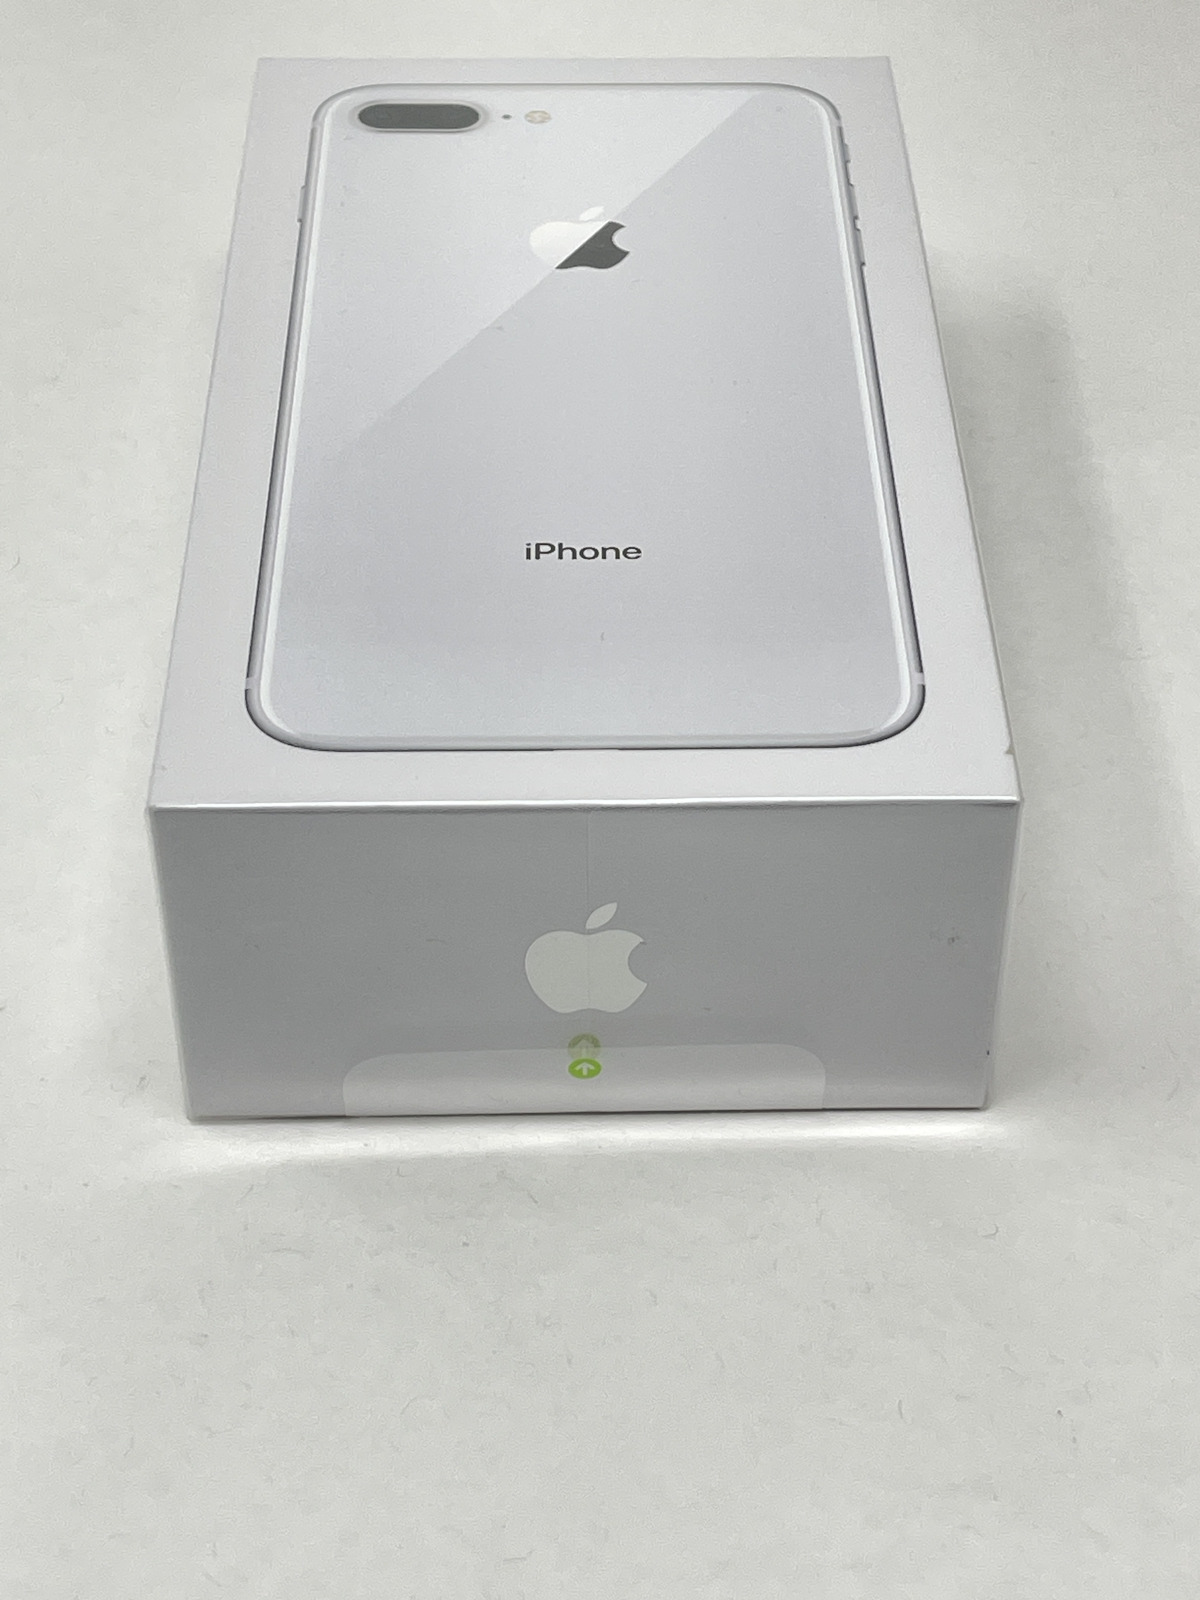 Apple iPhone 8 Plus - 64GB - Silver (Unlocked) A1864 (CDMA + GSM) New Sealed